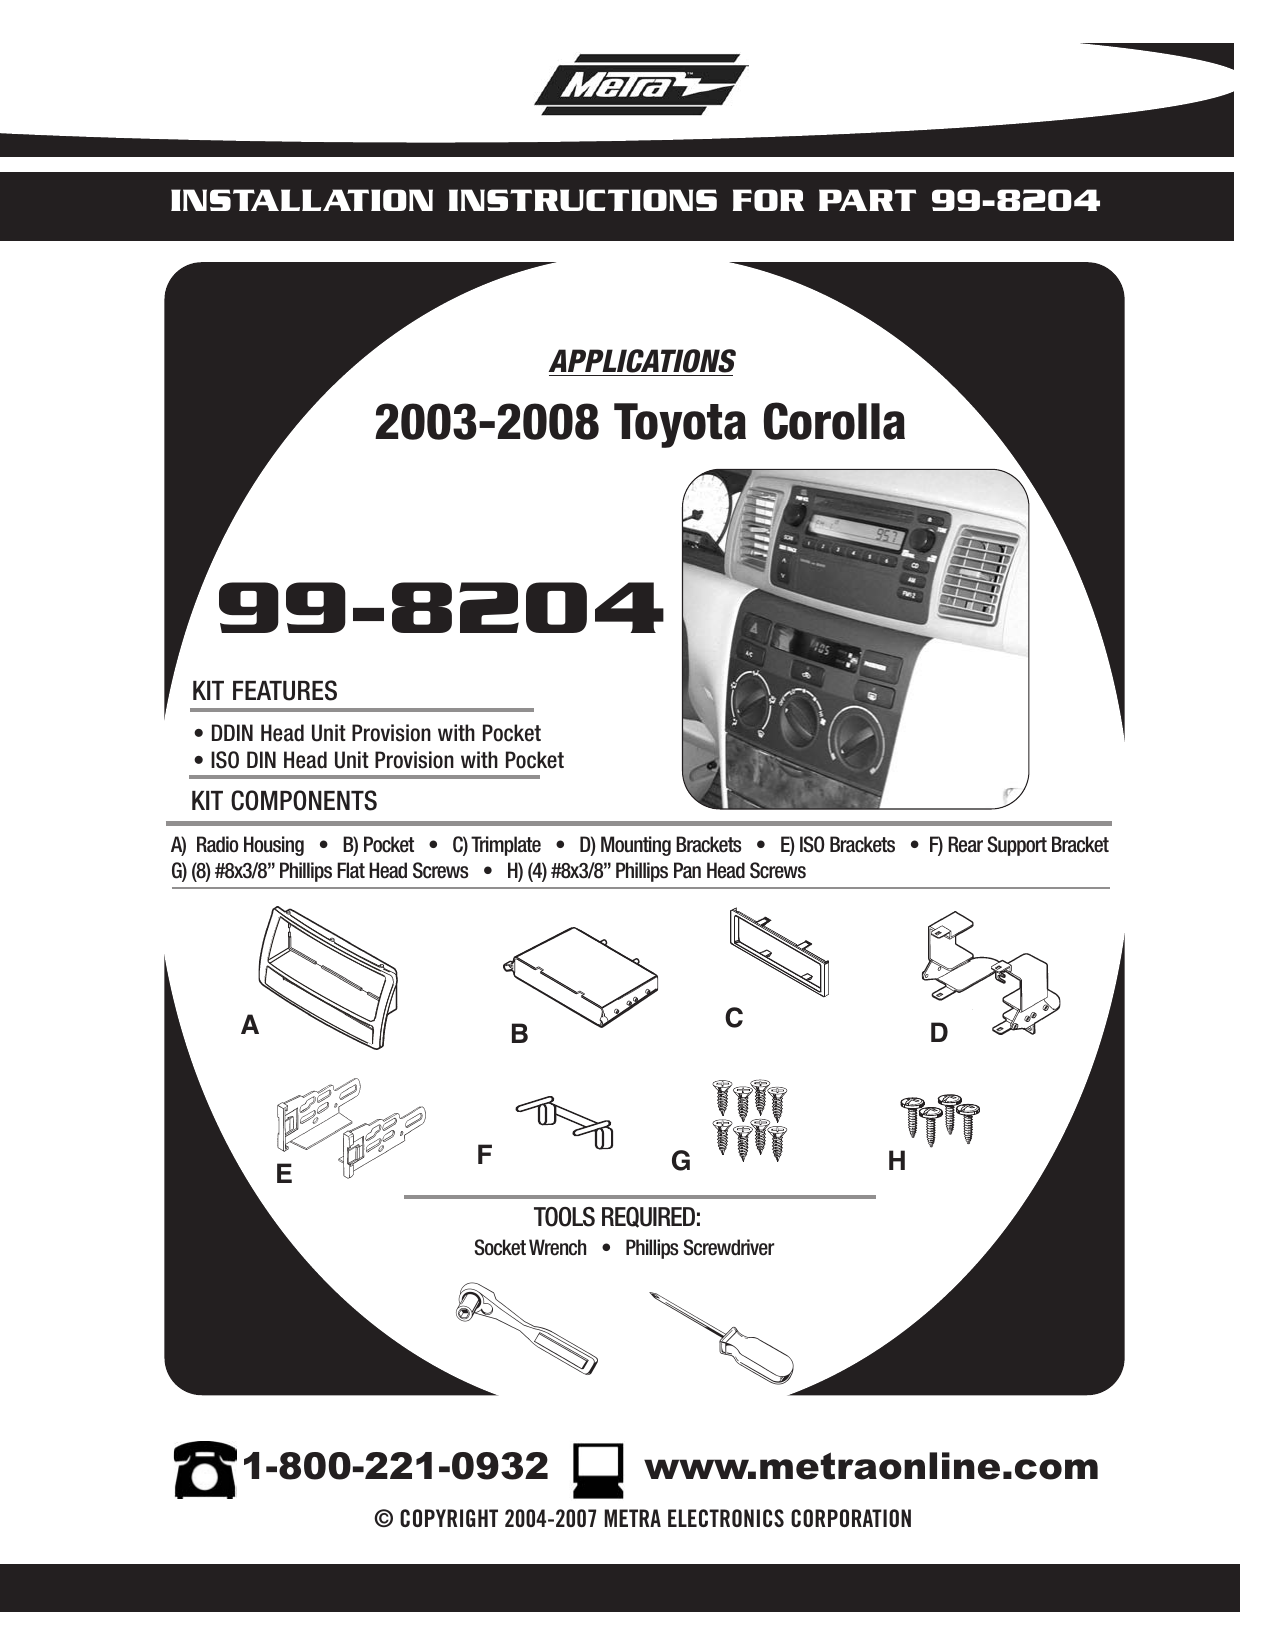 Metra 998204 99-8204 08 Installation Kit for Toyota Corolla 